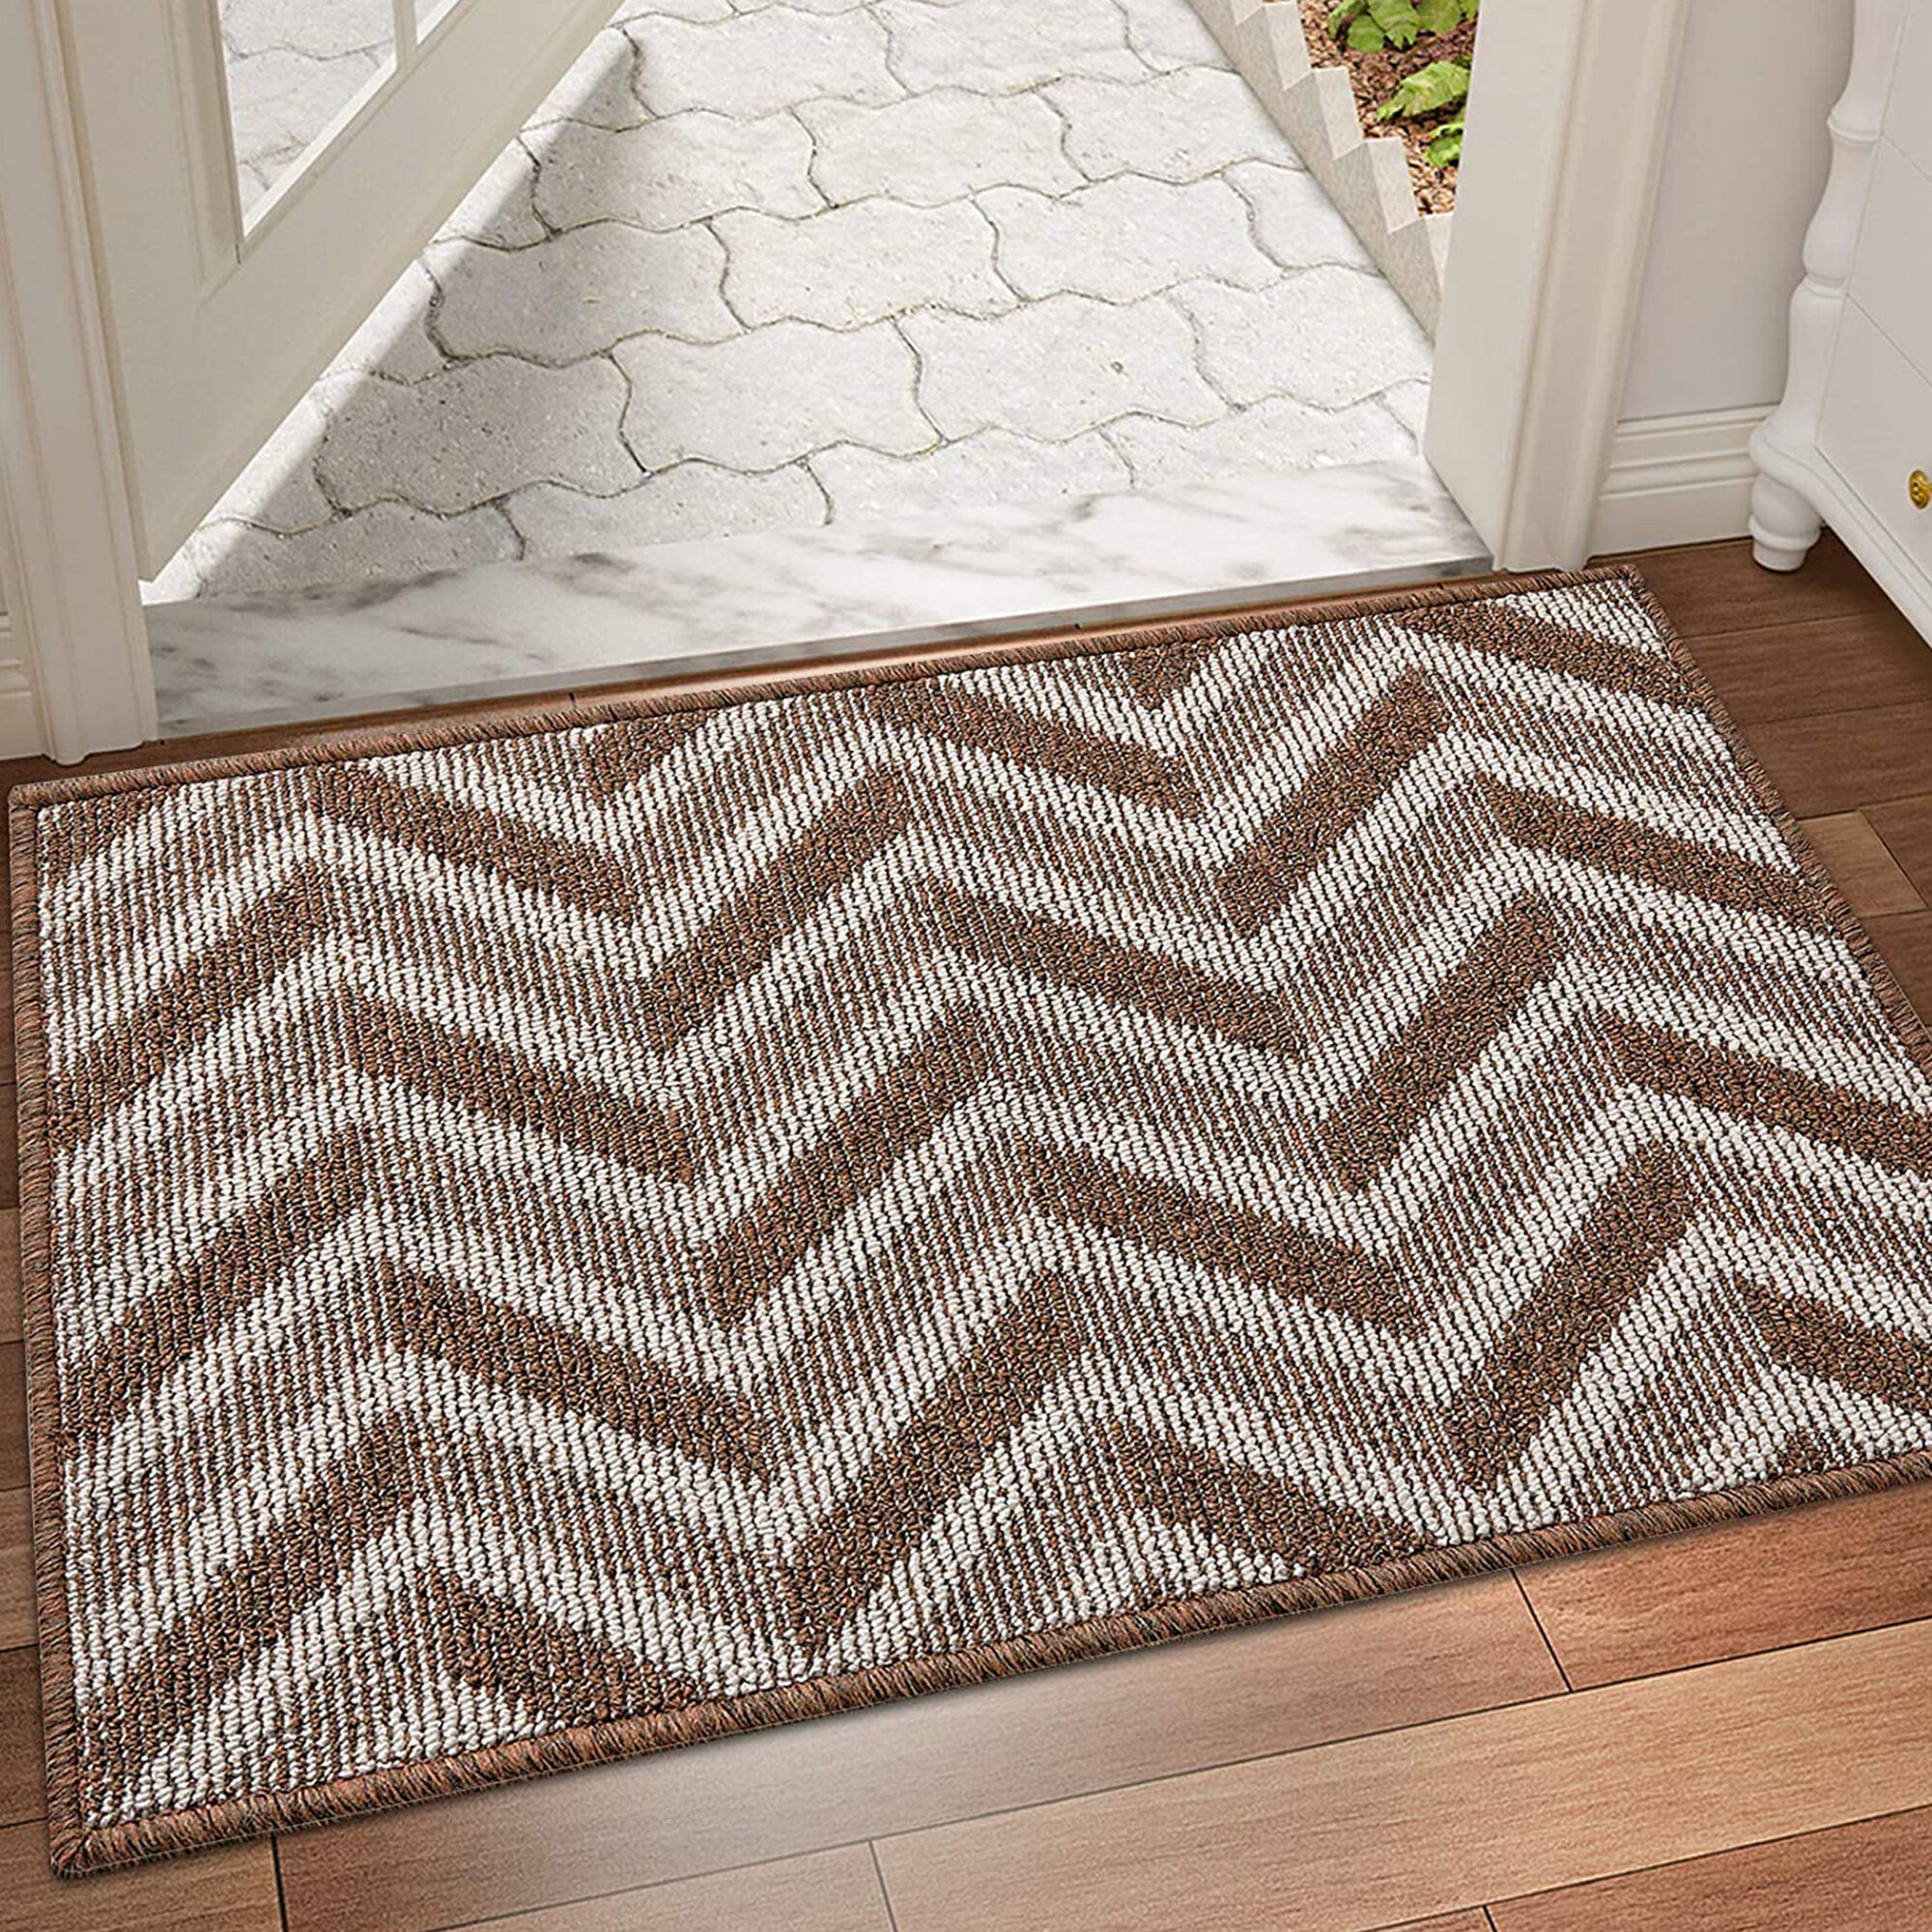 Durable Rubber Backed Non-Slip Doormat For Indoor outdoor Entrance Rug 